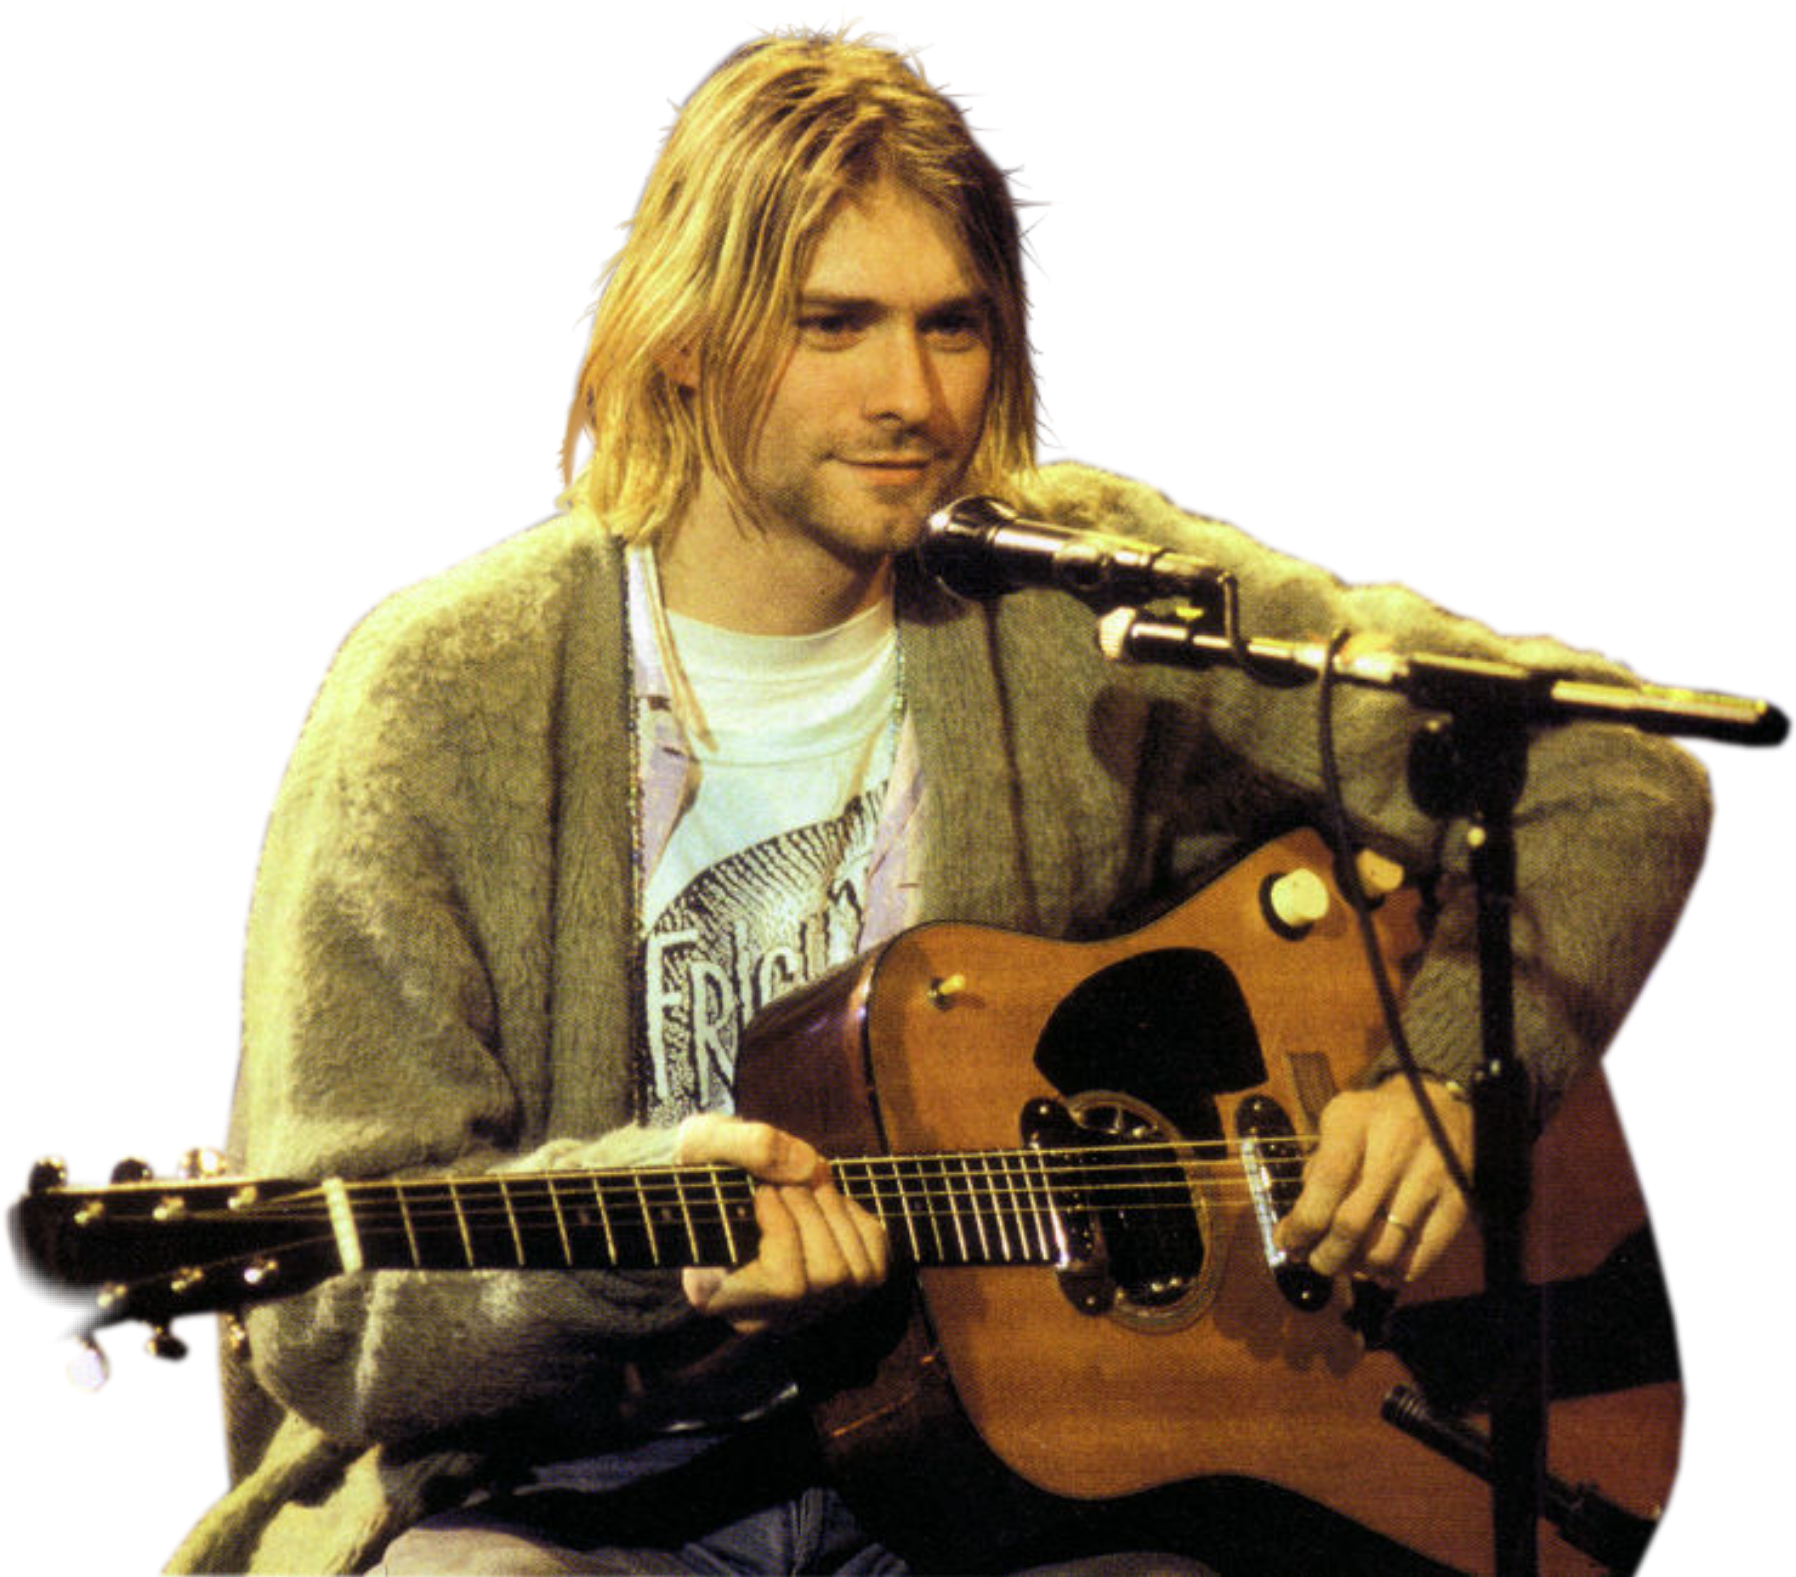 Nirvana guitar